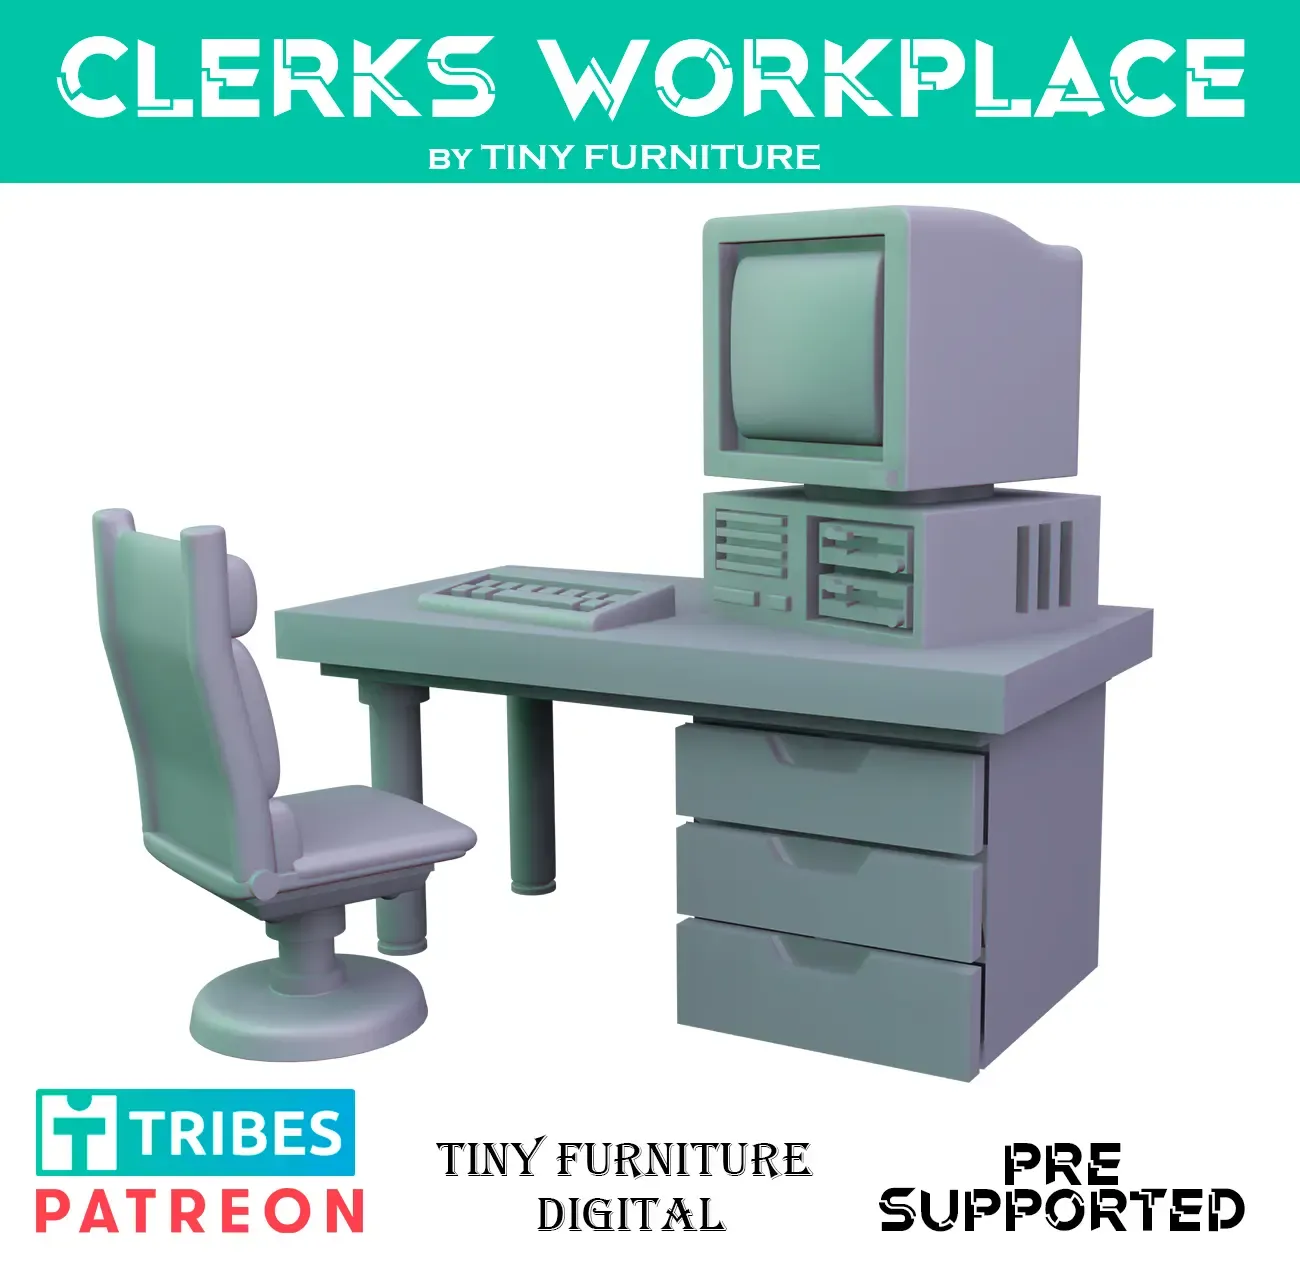 Clerks workplace